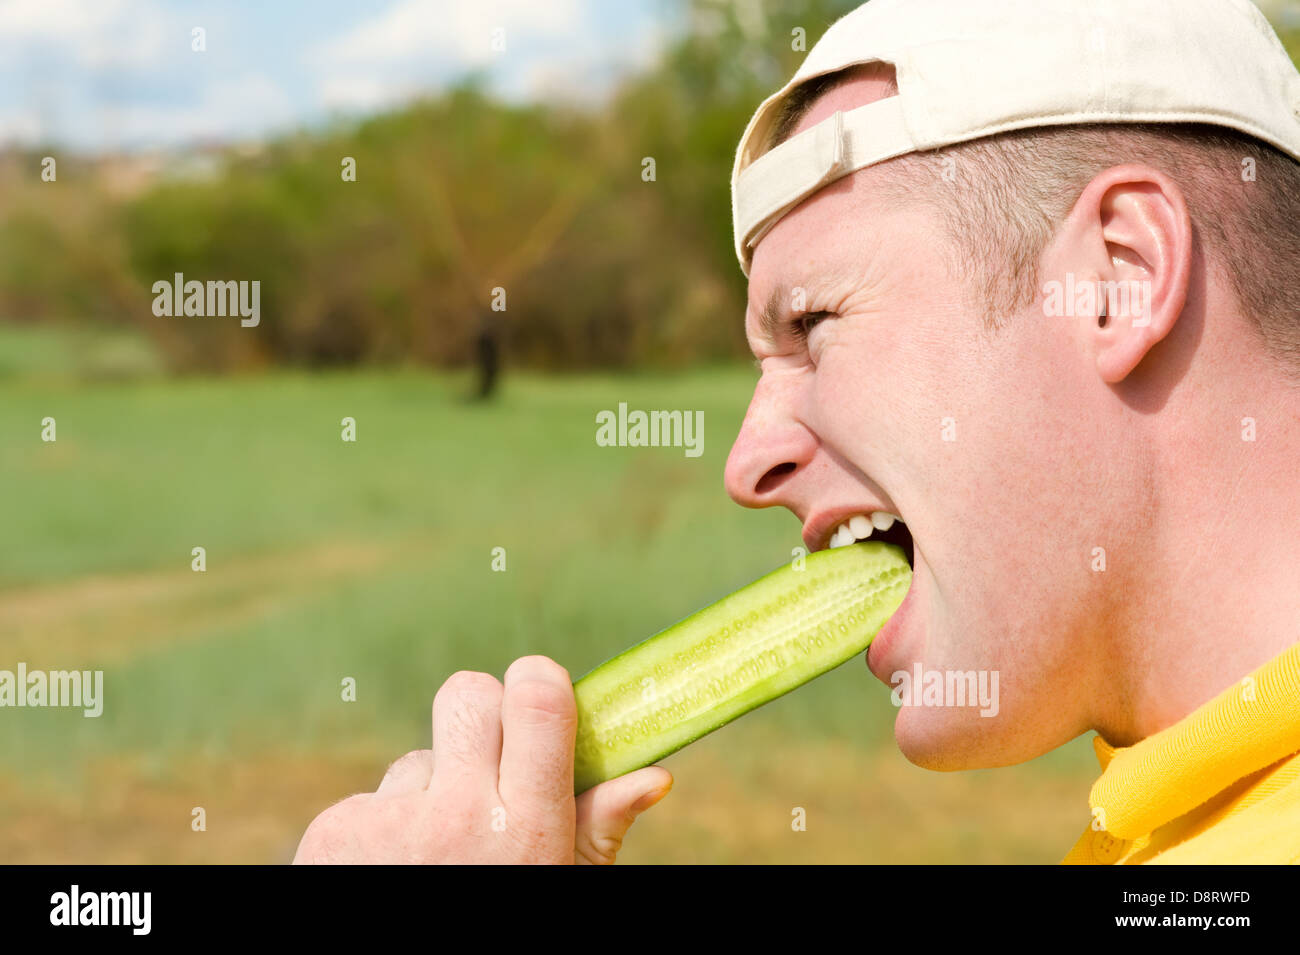 Man biting concombre Banque D'Images